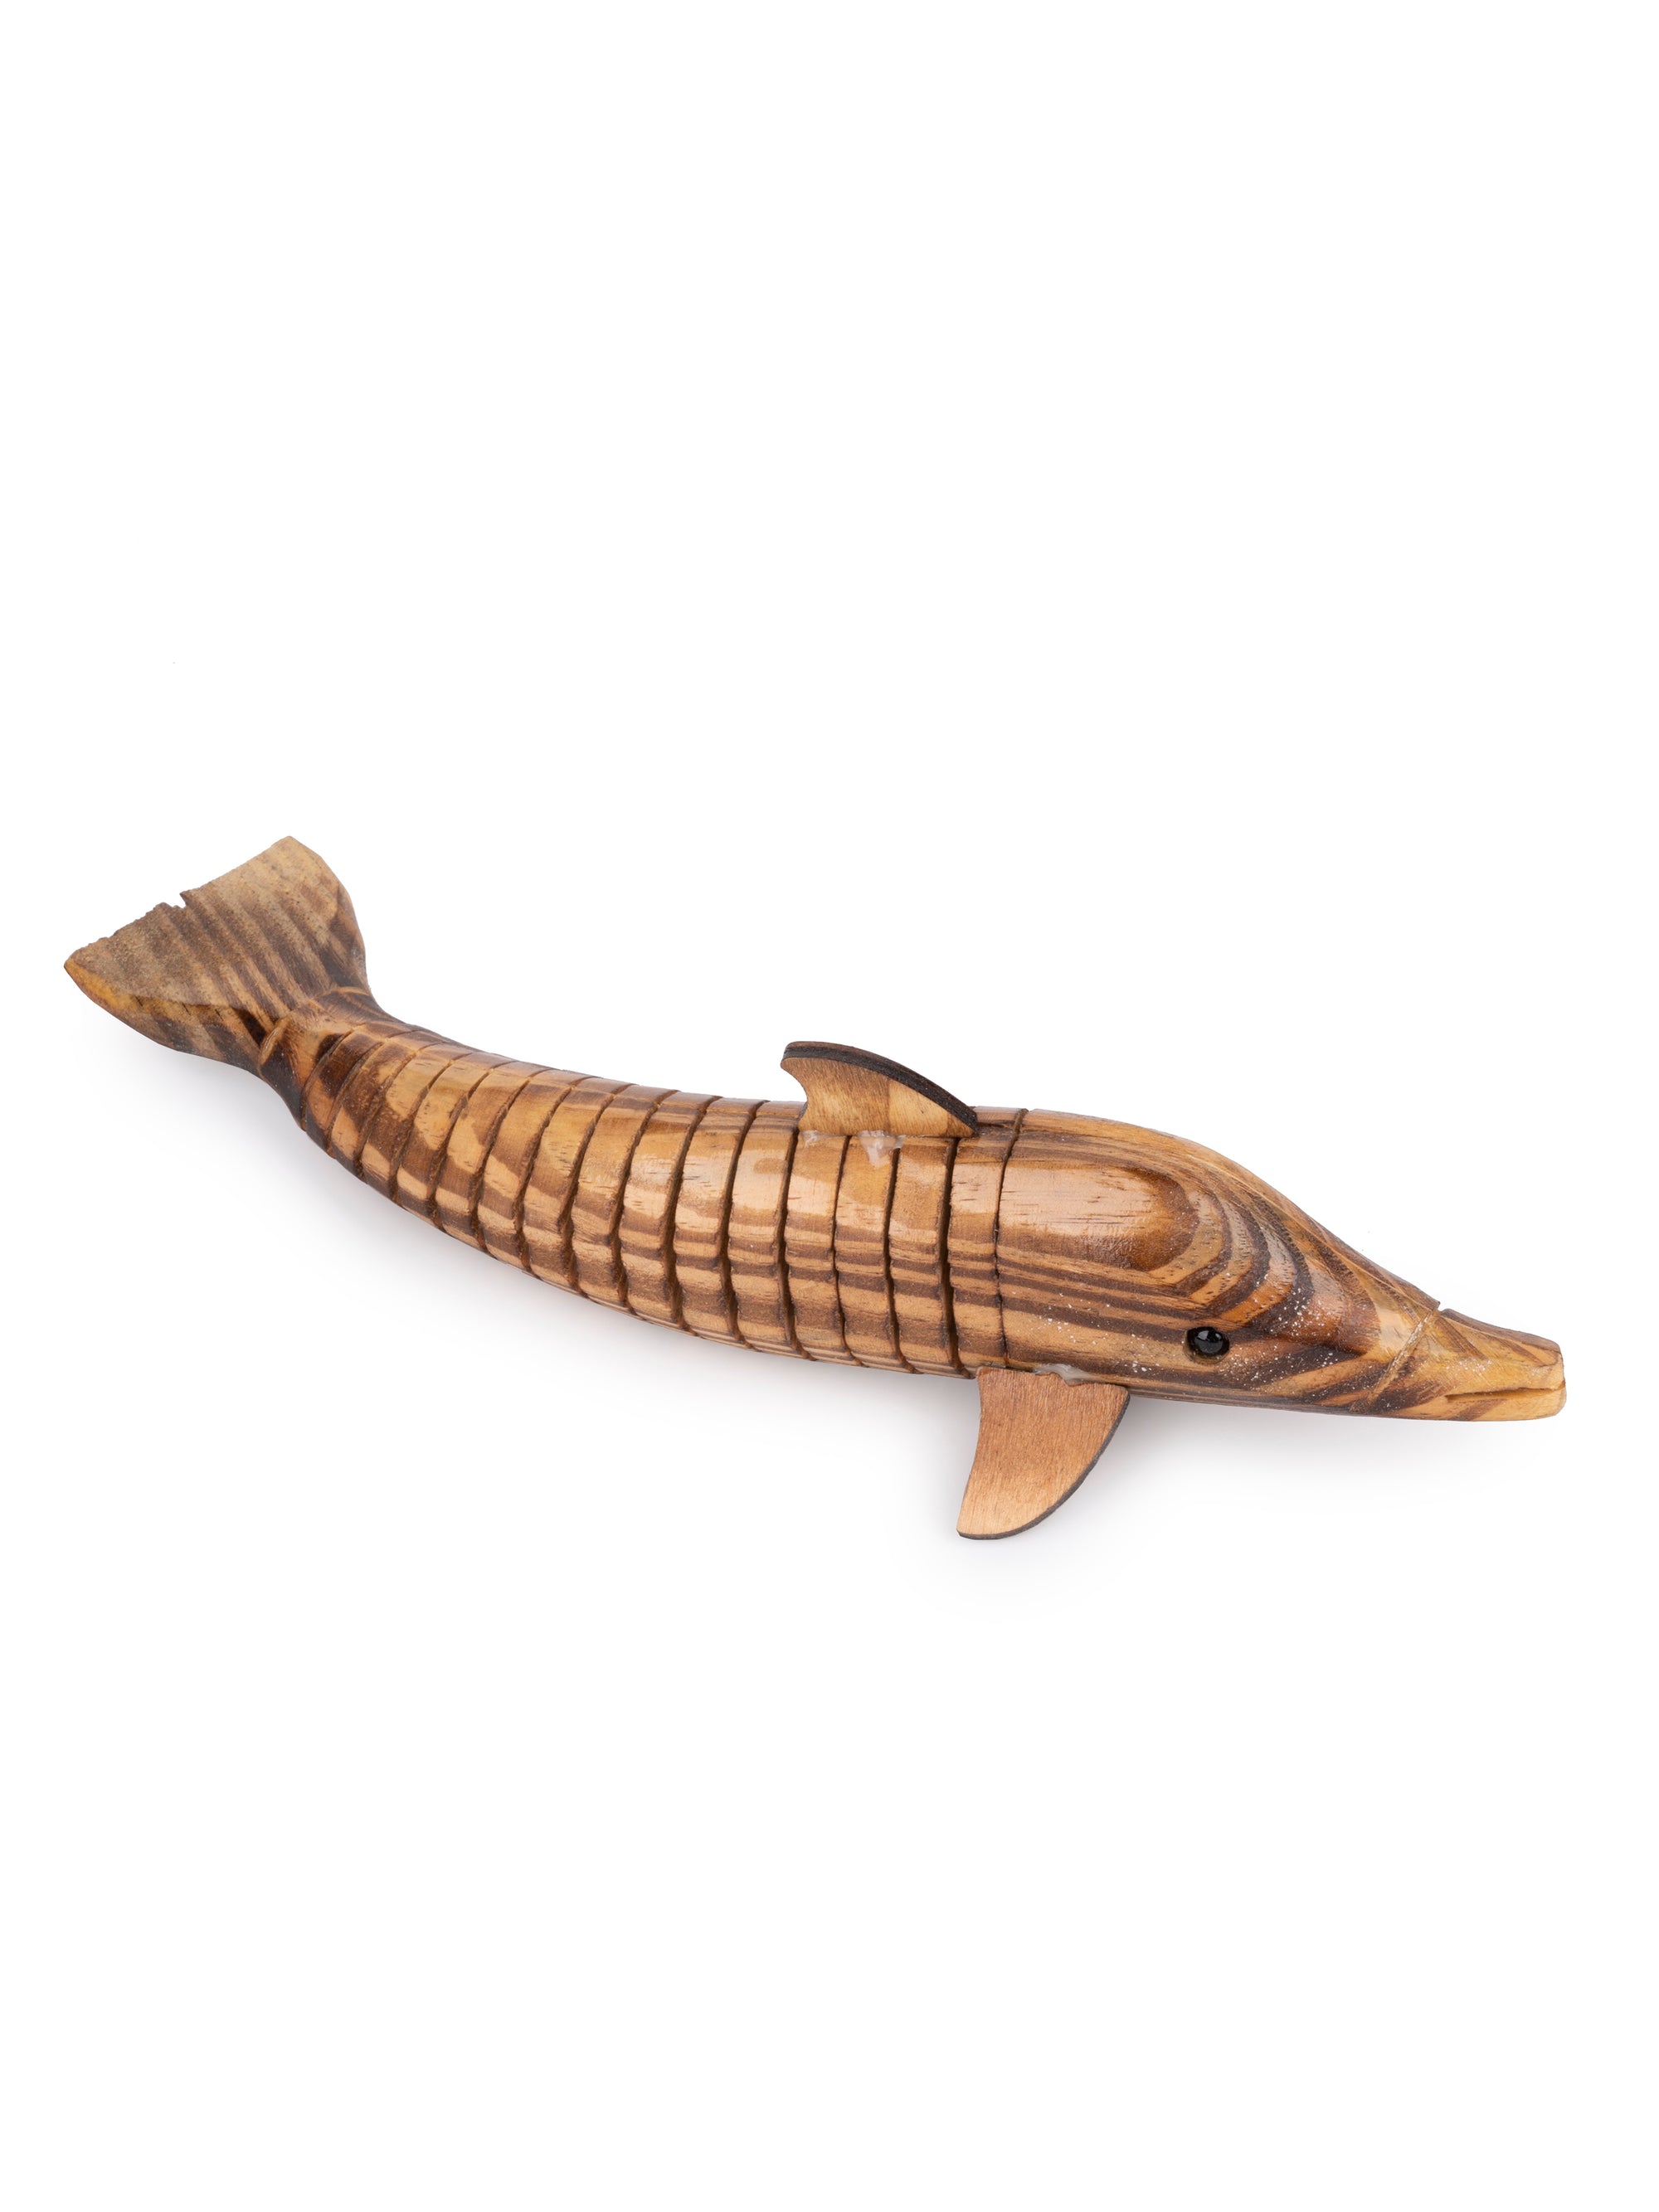 Shantiniketan Art - Wooden Dolphin Decorative Showpiece / Toy - The Heritage Artifacts